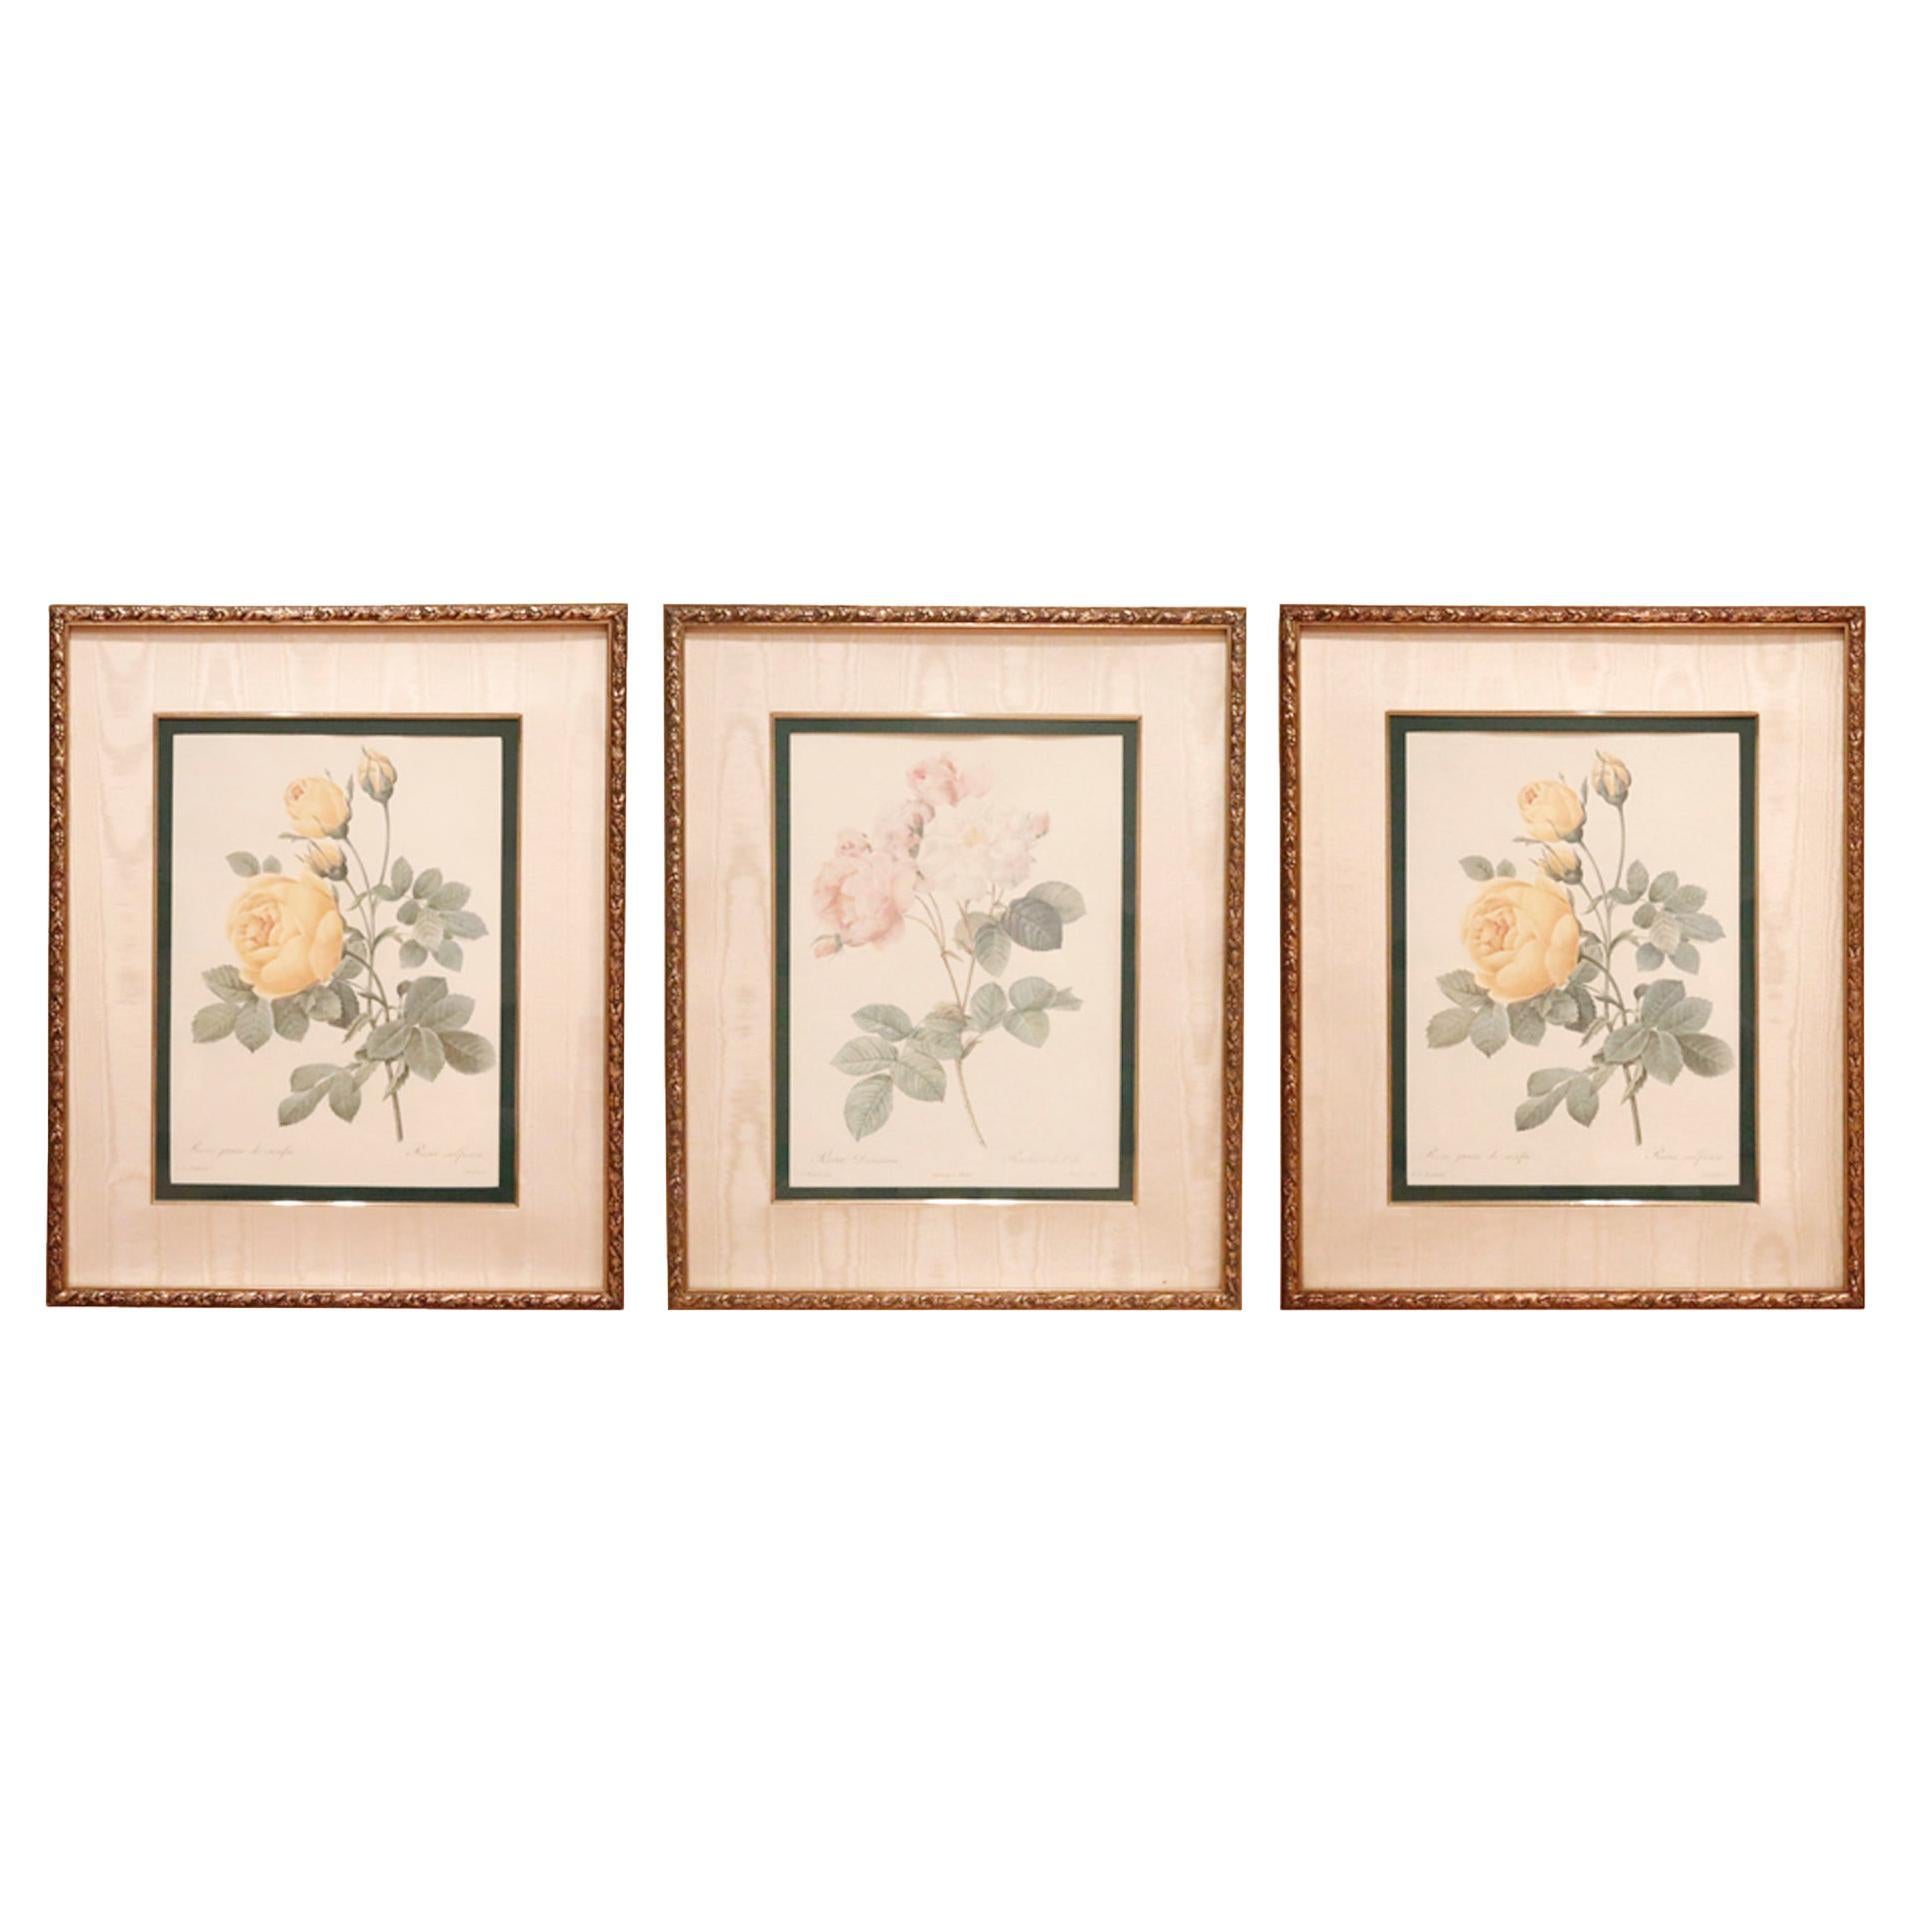 Framed Pierre-Joseph Redouté Prints, Set of 3